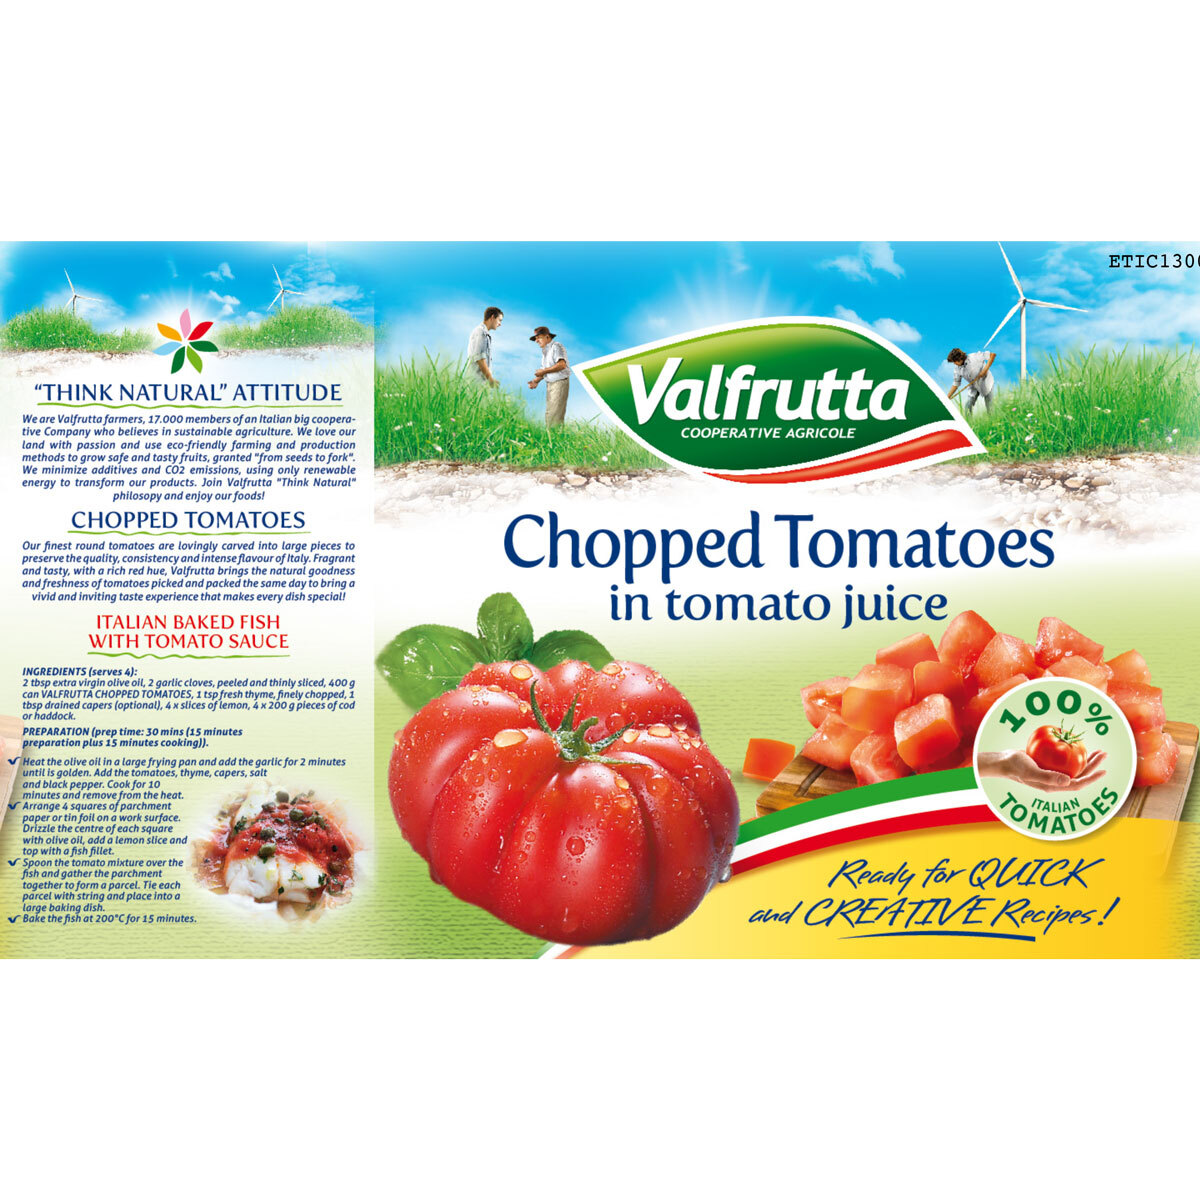 Lifestyle image showing tomato and chopped vegtable